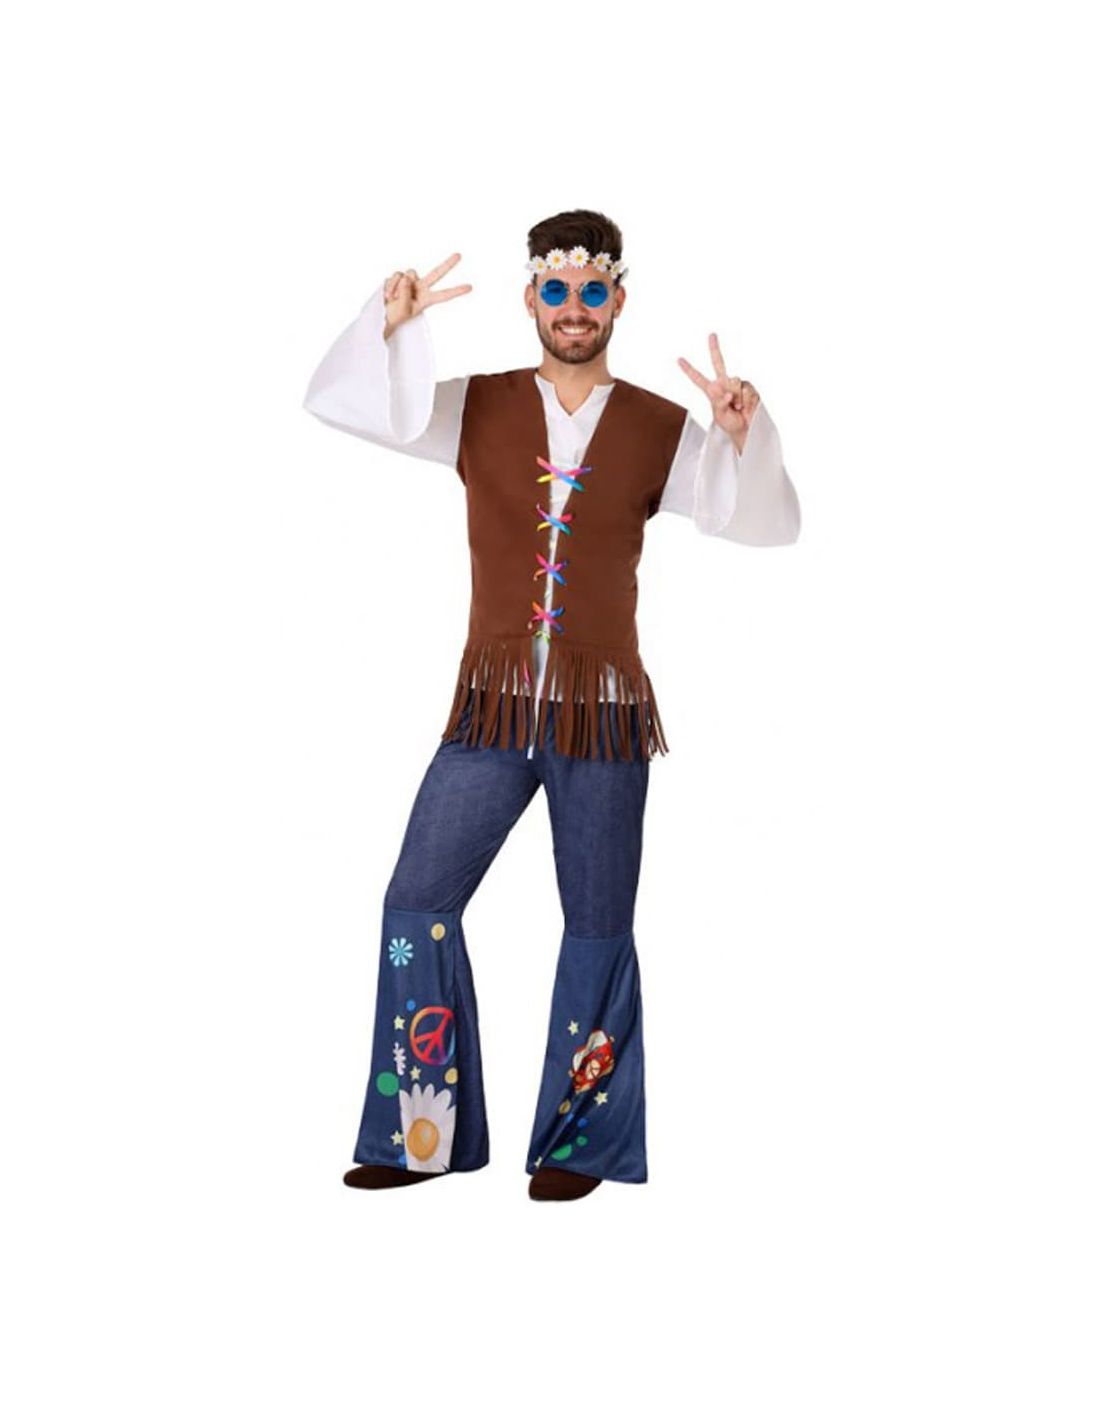 Detalles más de 66 pantalones hippies hombre muy caliente - vietkidsiq ...